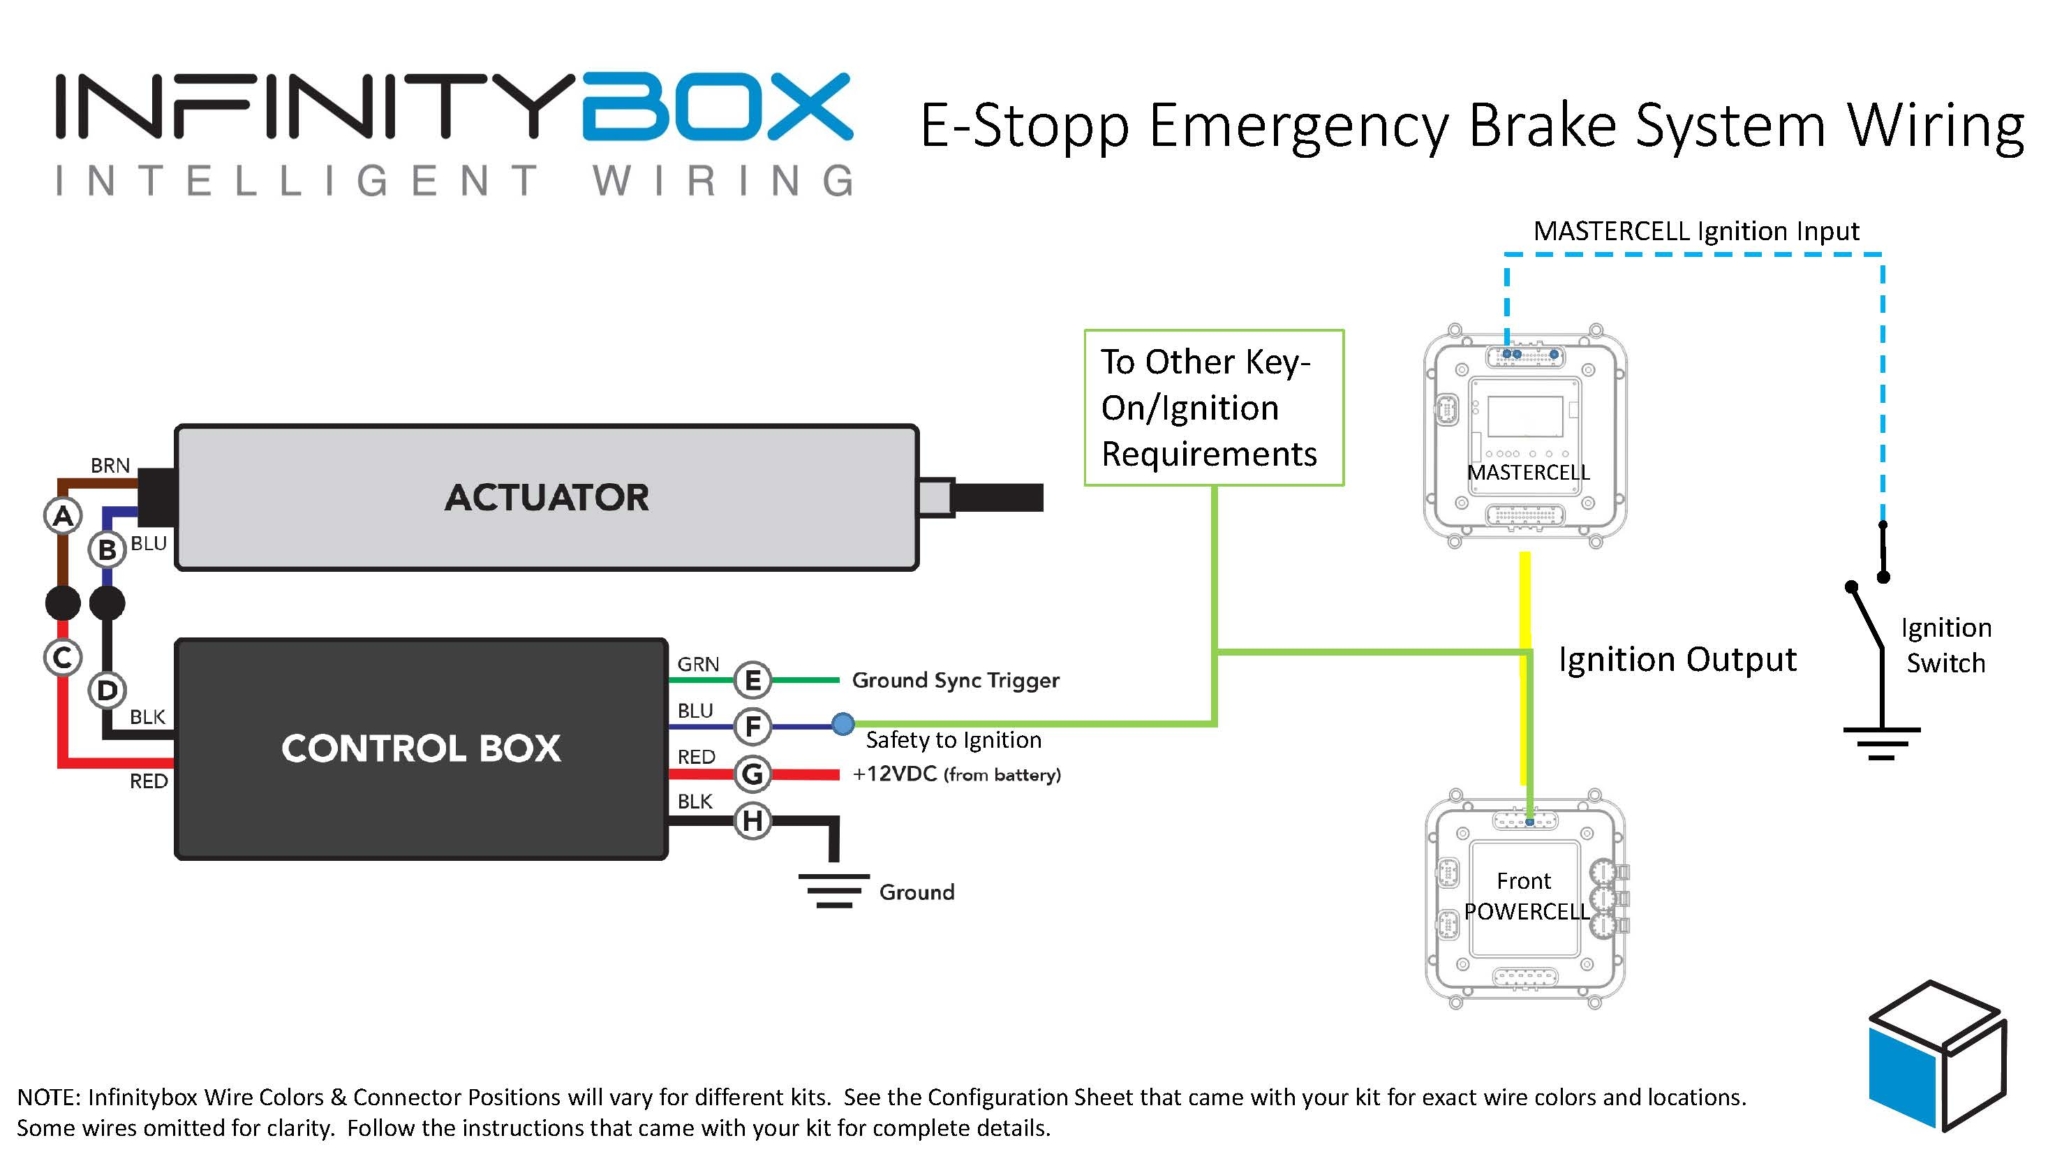 EStopp Emergency Brake System Wiring Infinitybox